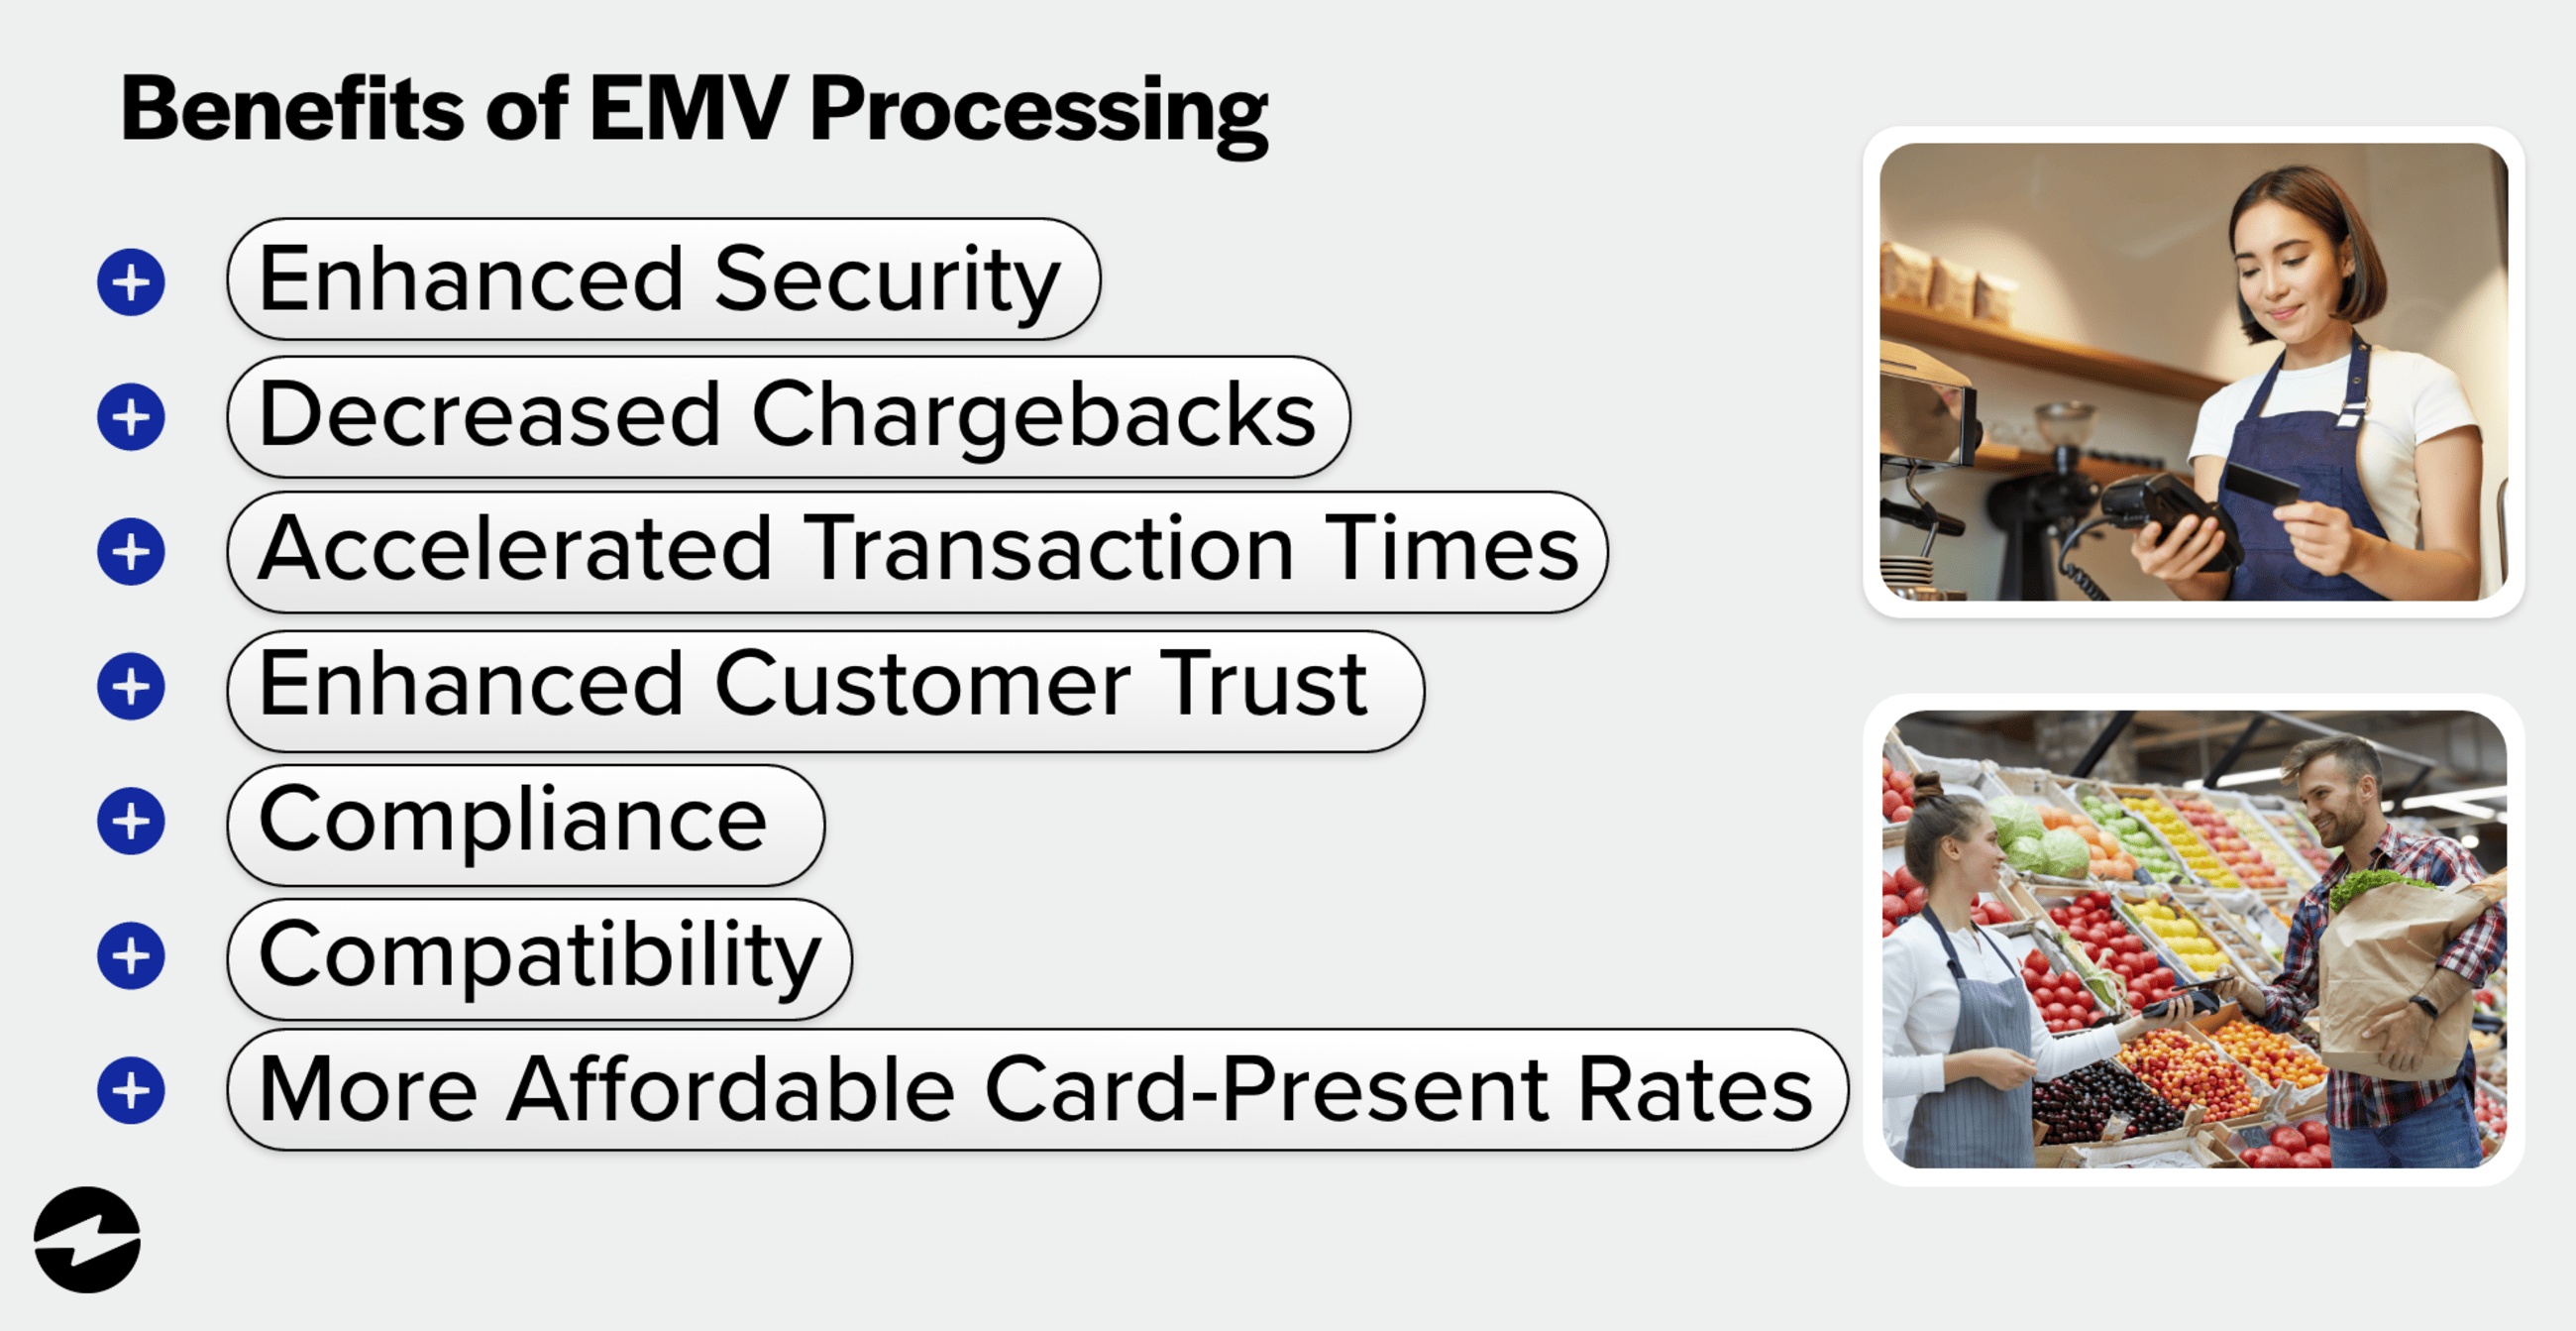 Benefits of EMV processing